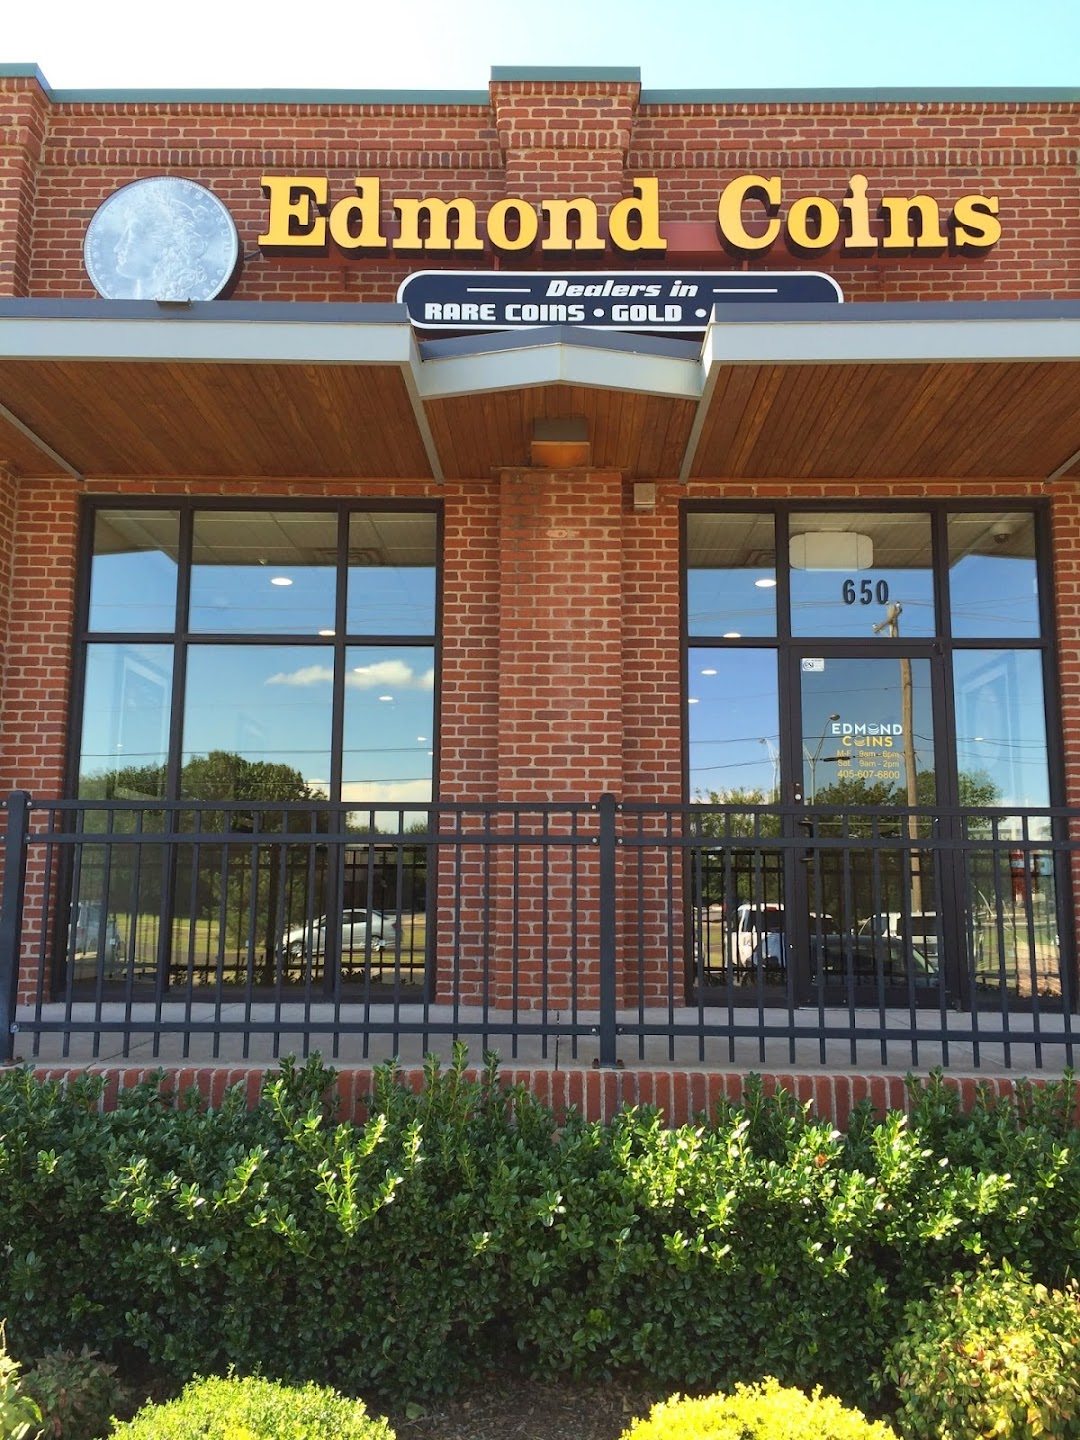 Edmond Coins